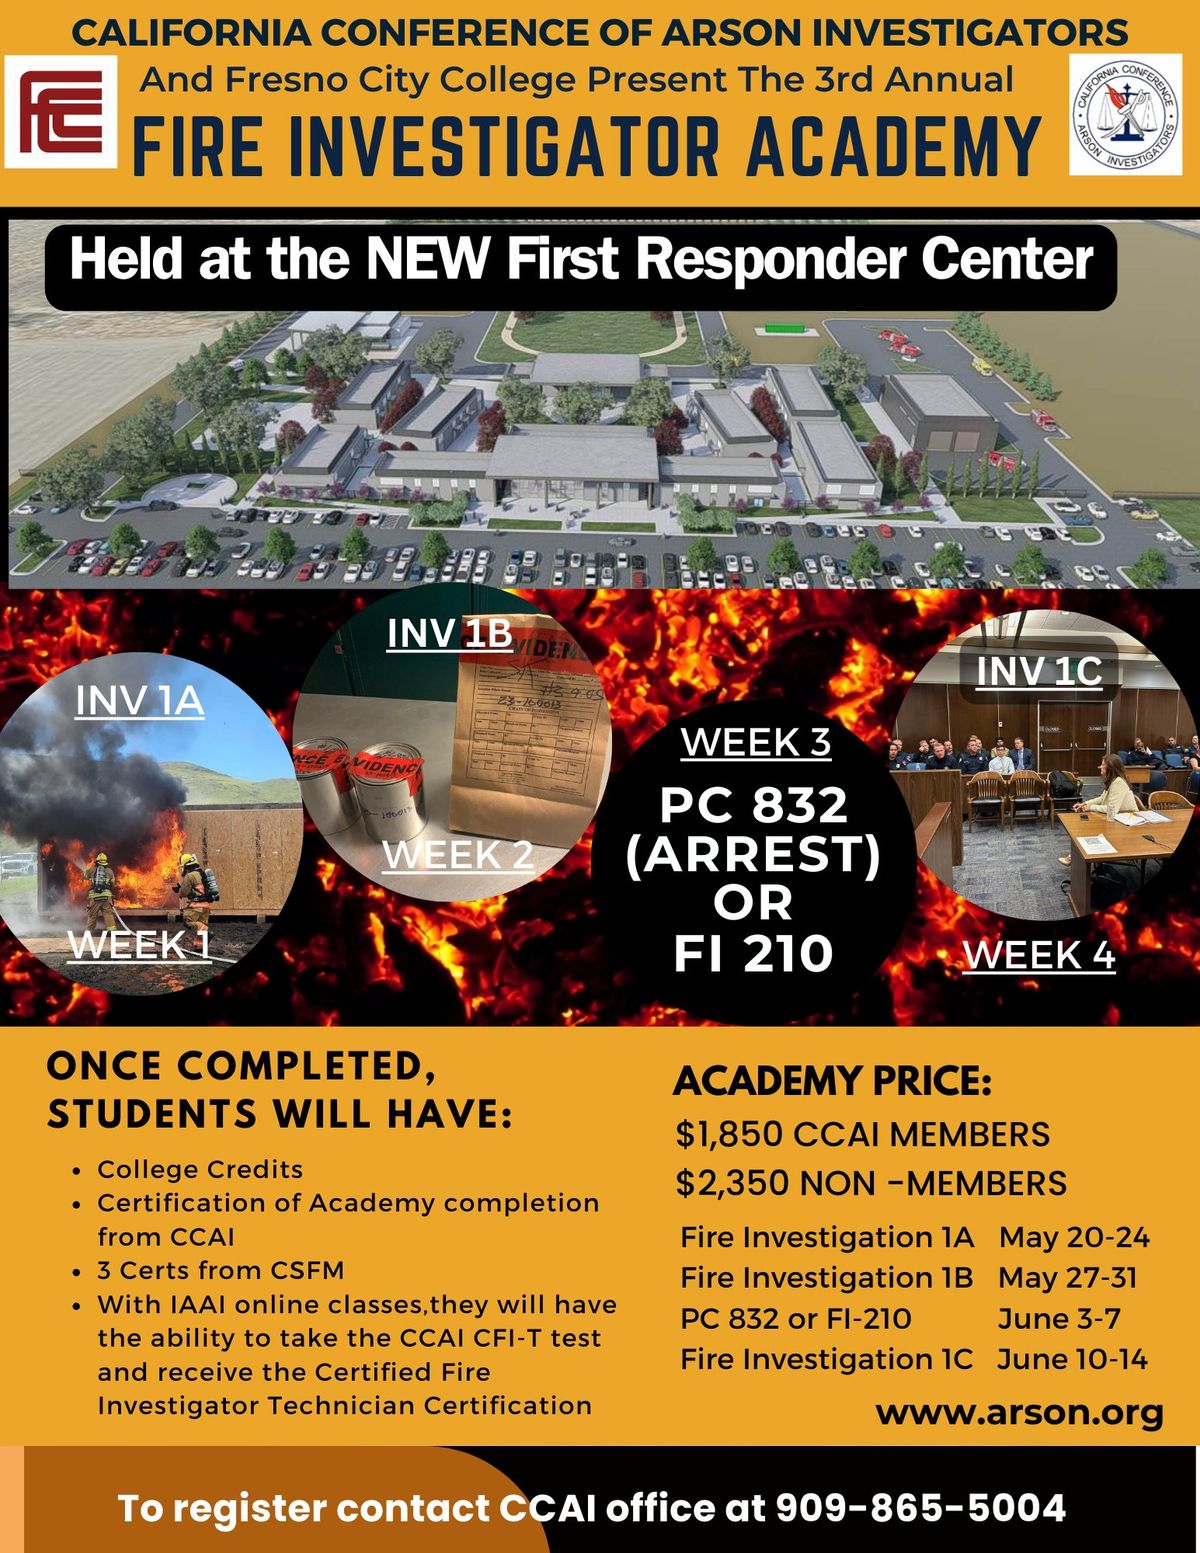 CCAI Fire Investigator Academy